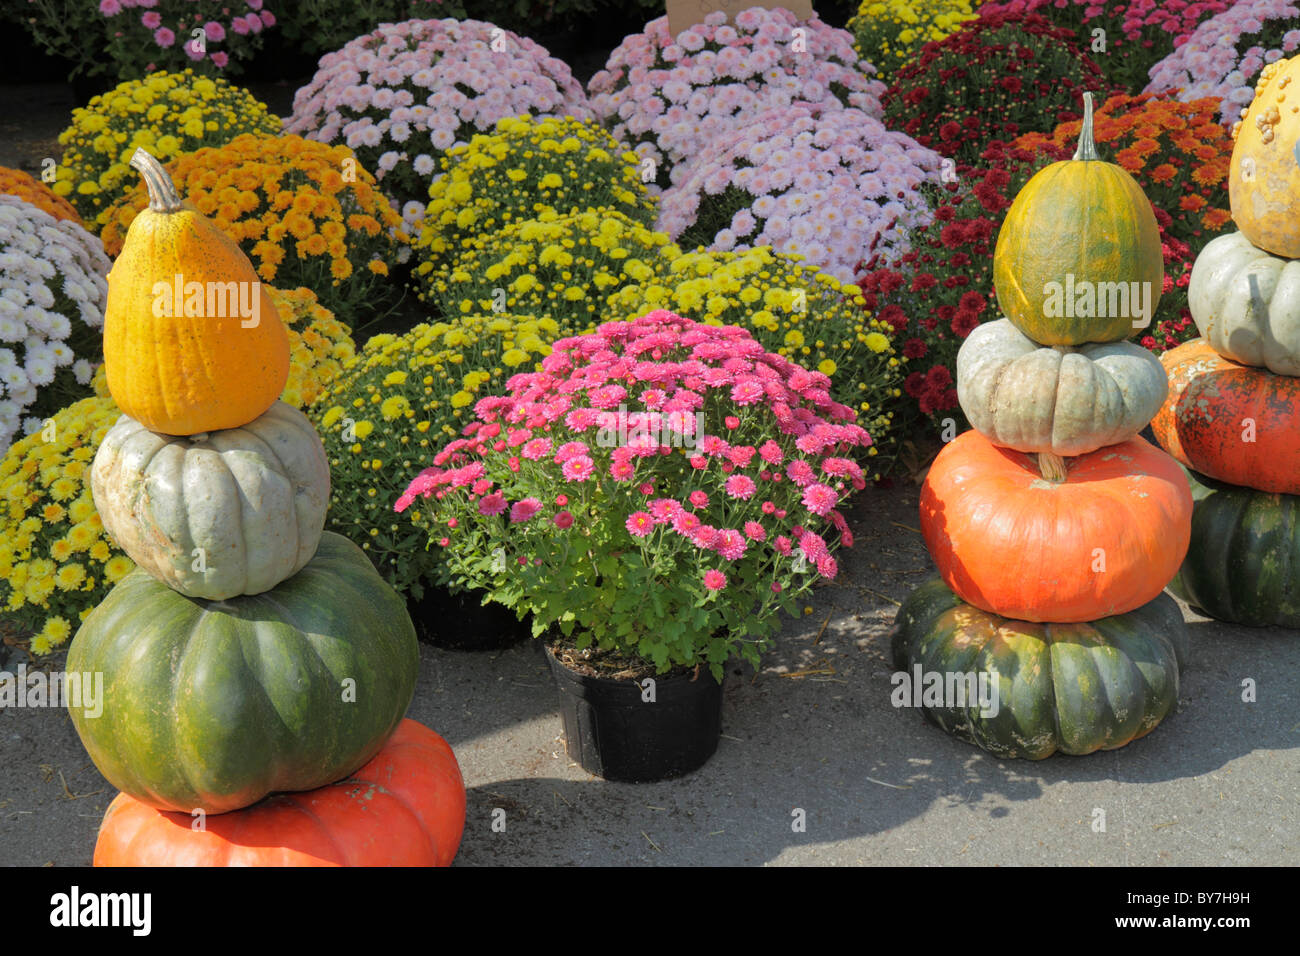 Tennessee Nashville,Nashville Farmers' Market,locally grown produce,Fall harvest,Autumn,pumpkin,display sale decor,interior design,flower,plants,mums, Stock Photo